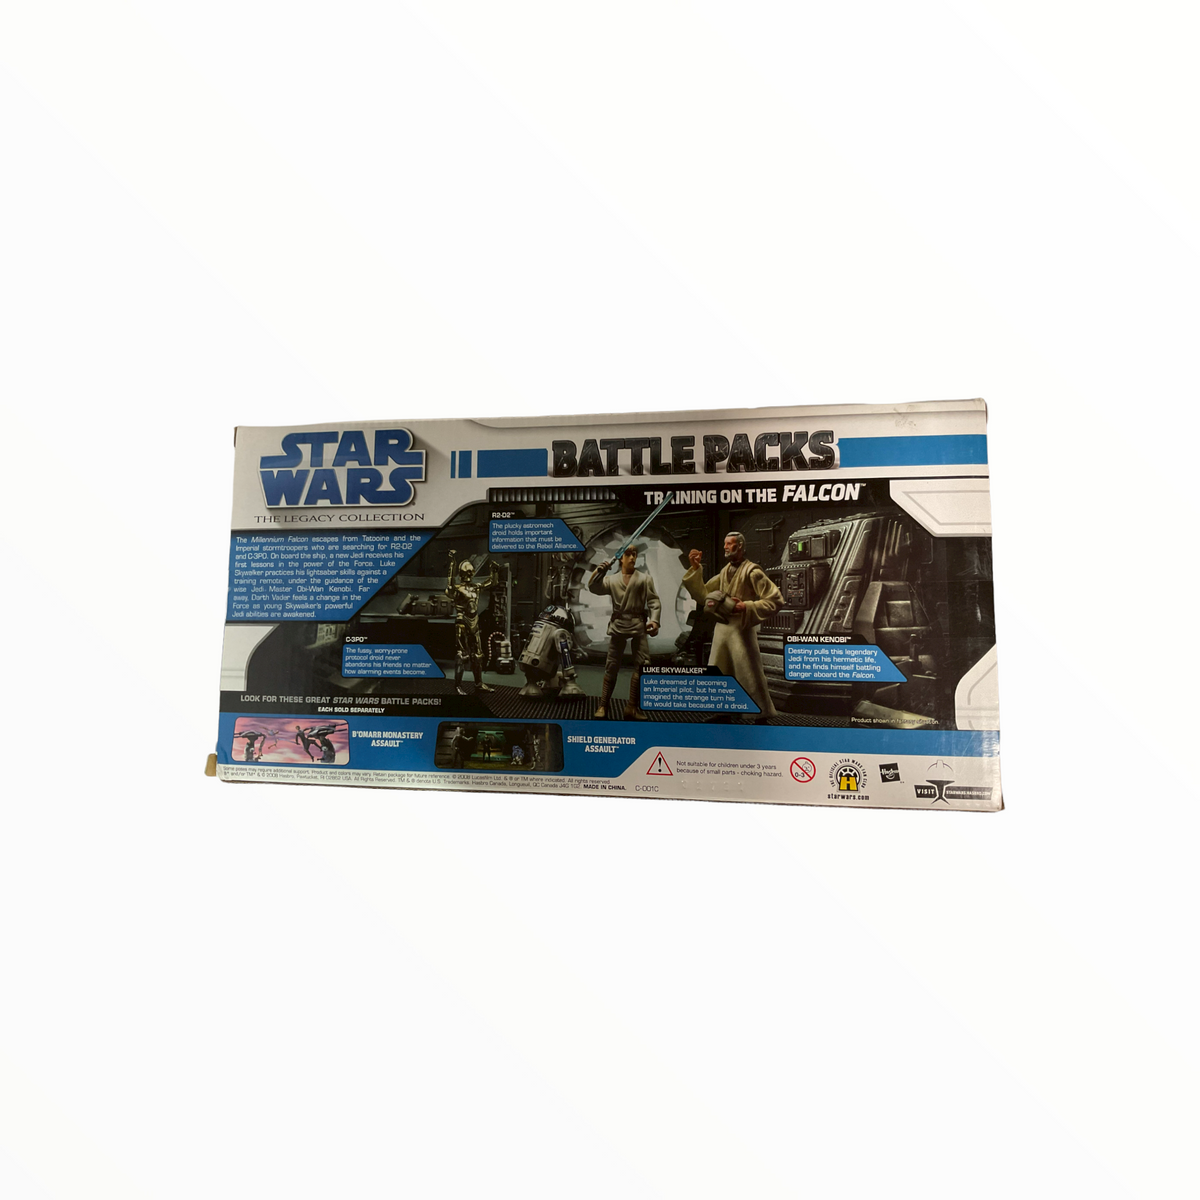 Hasbro Star Wars Battle Pack: Training on the Falcon